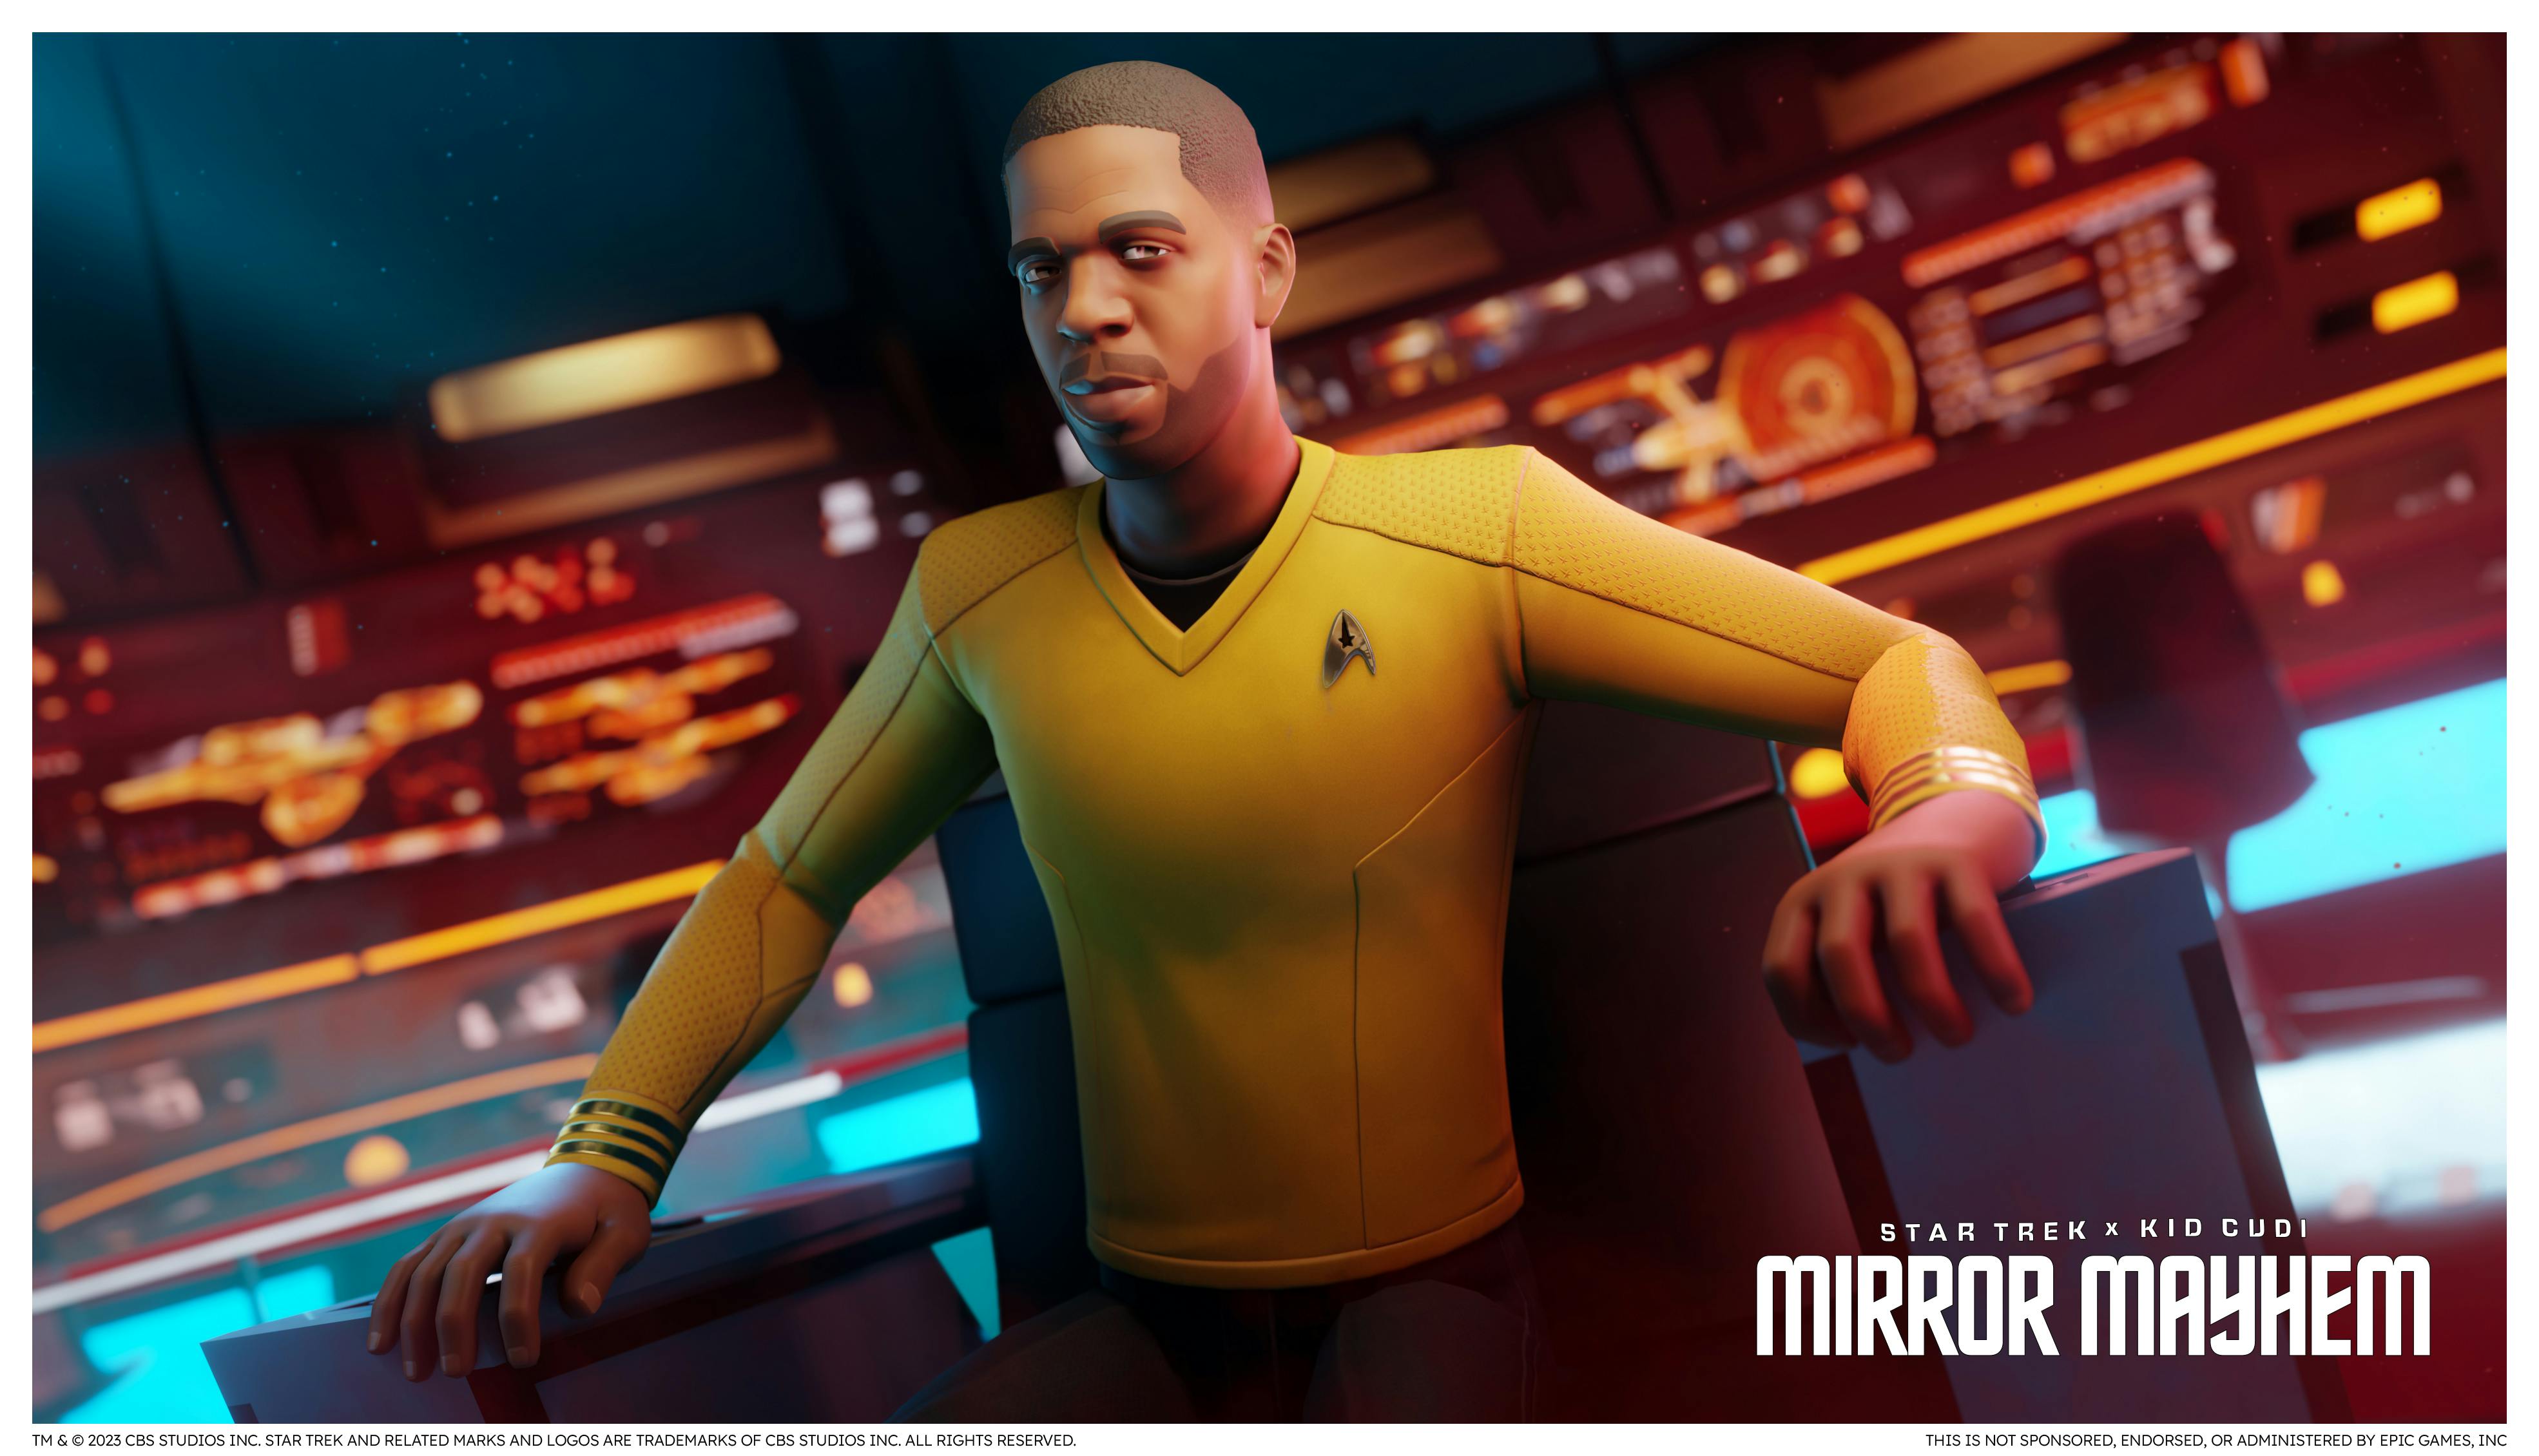 Star Trek x Kid Cudi Mirror Mayhem - Fortnite render - Captain on the Bridge